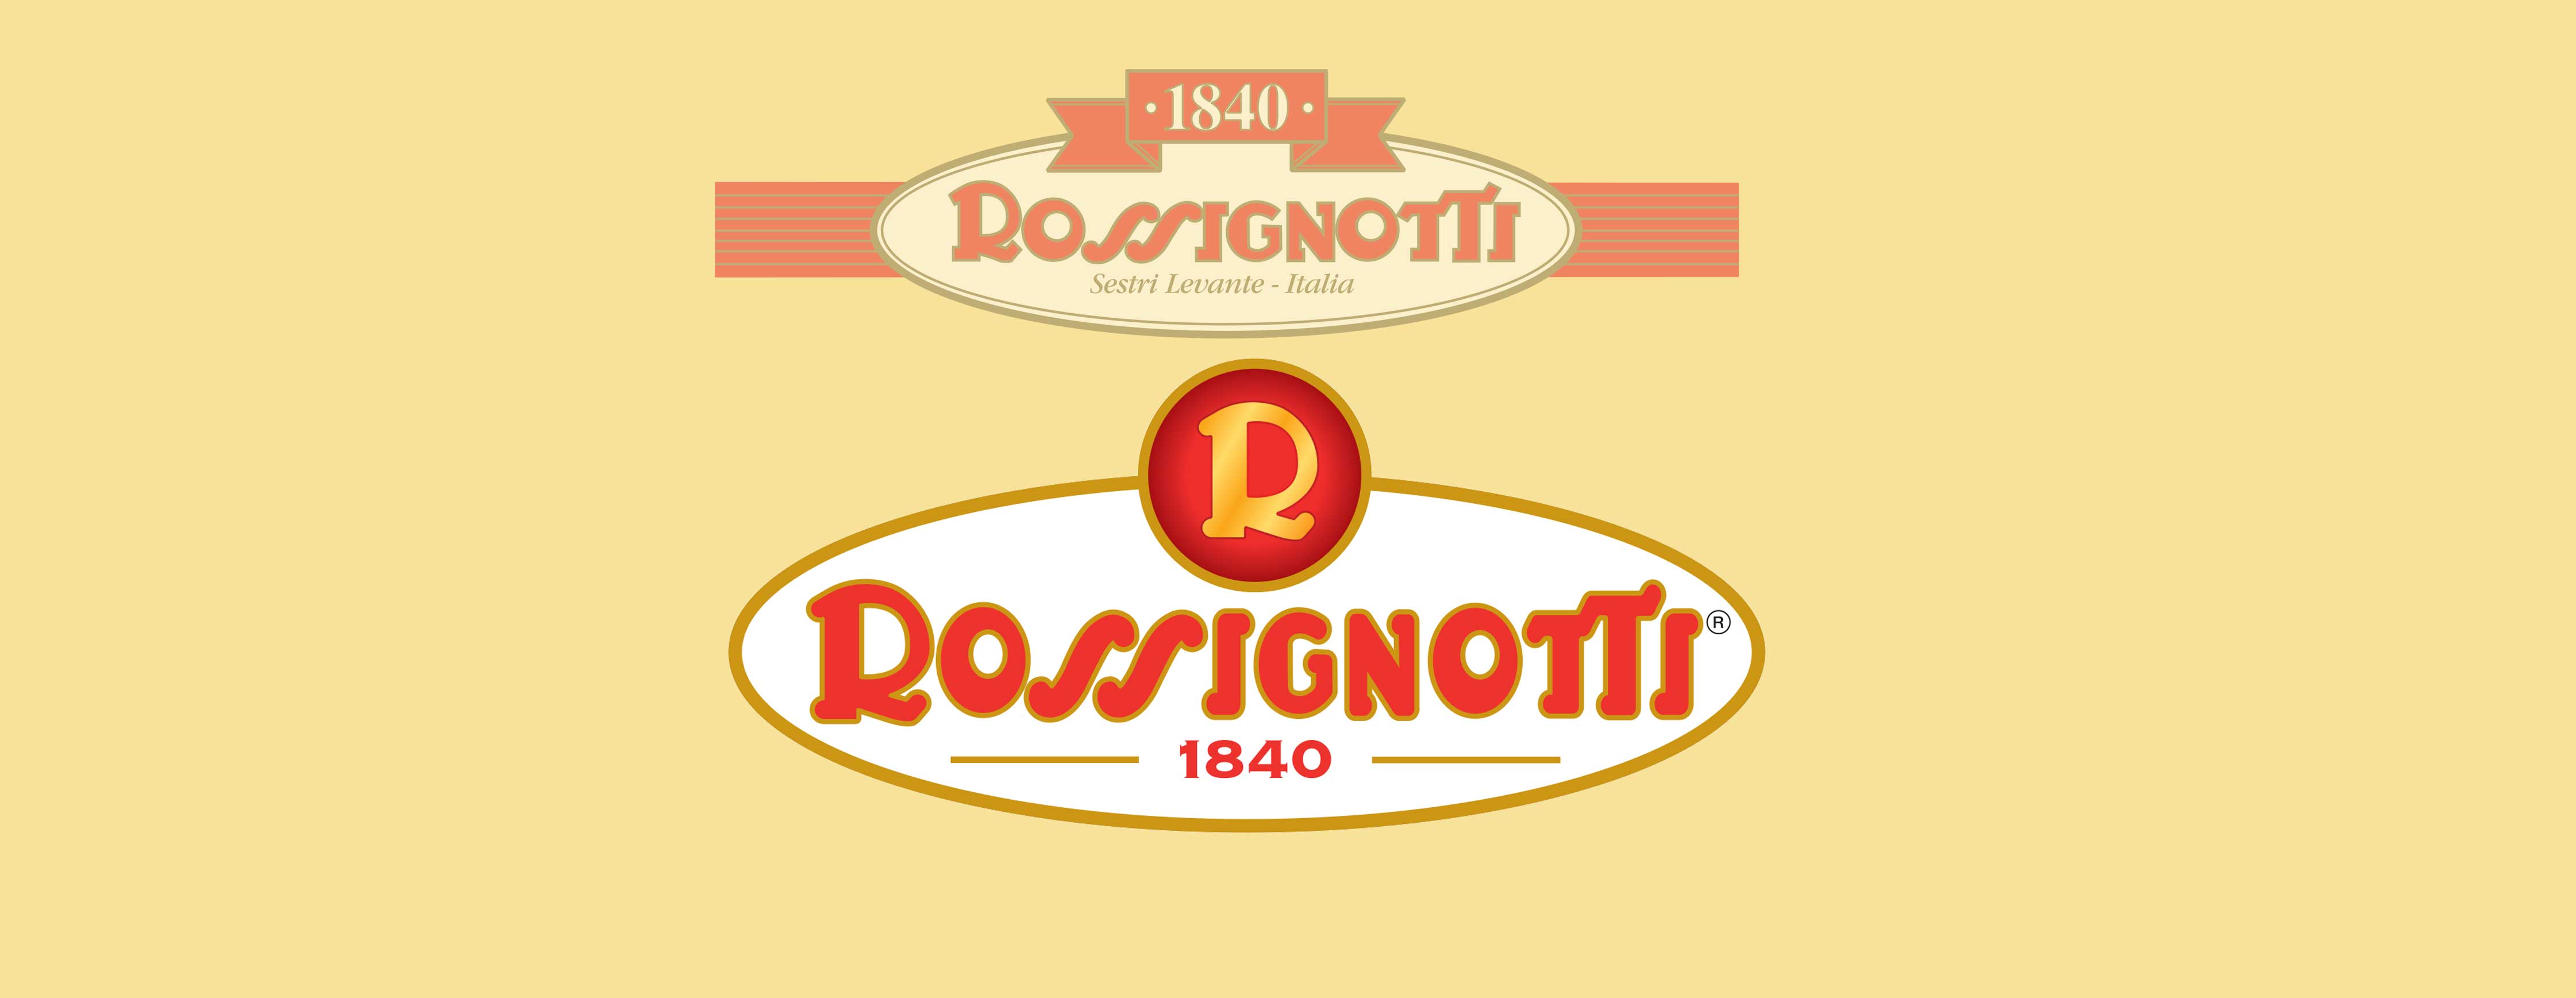 branding_rossignotti